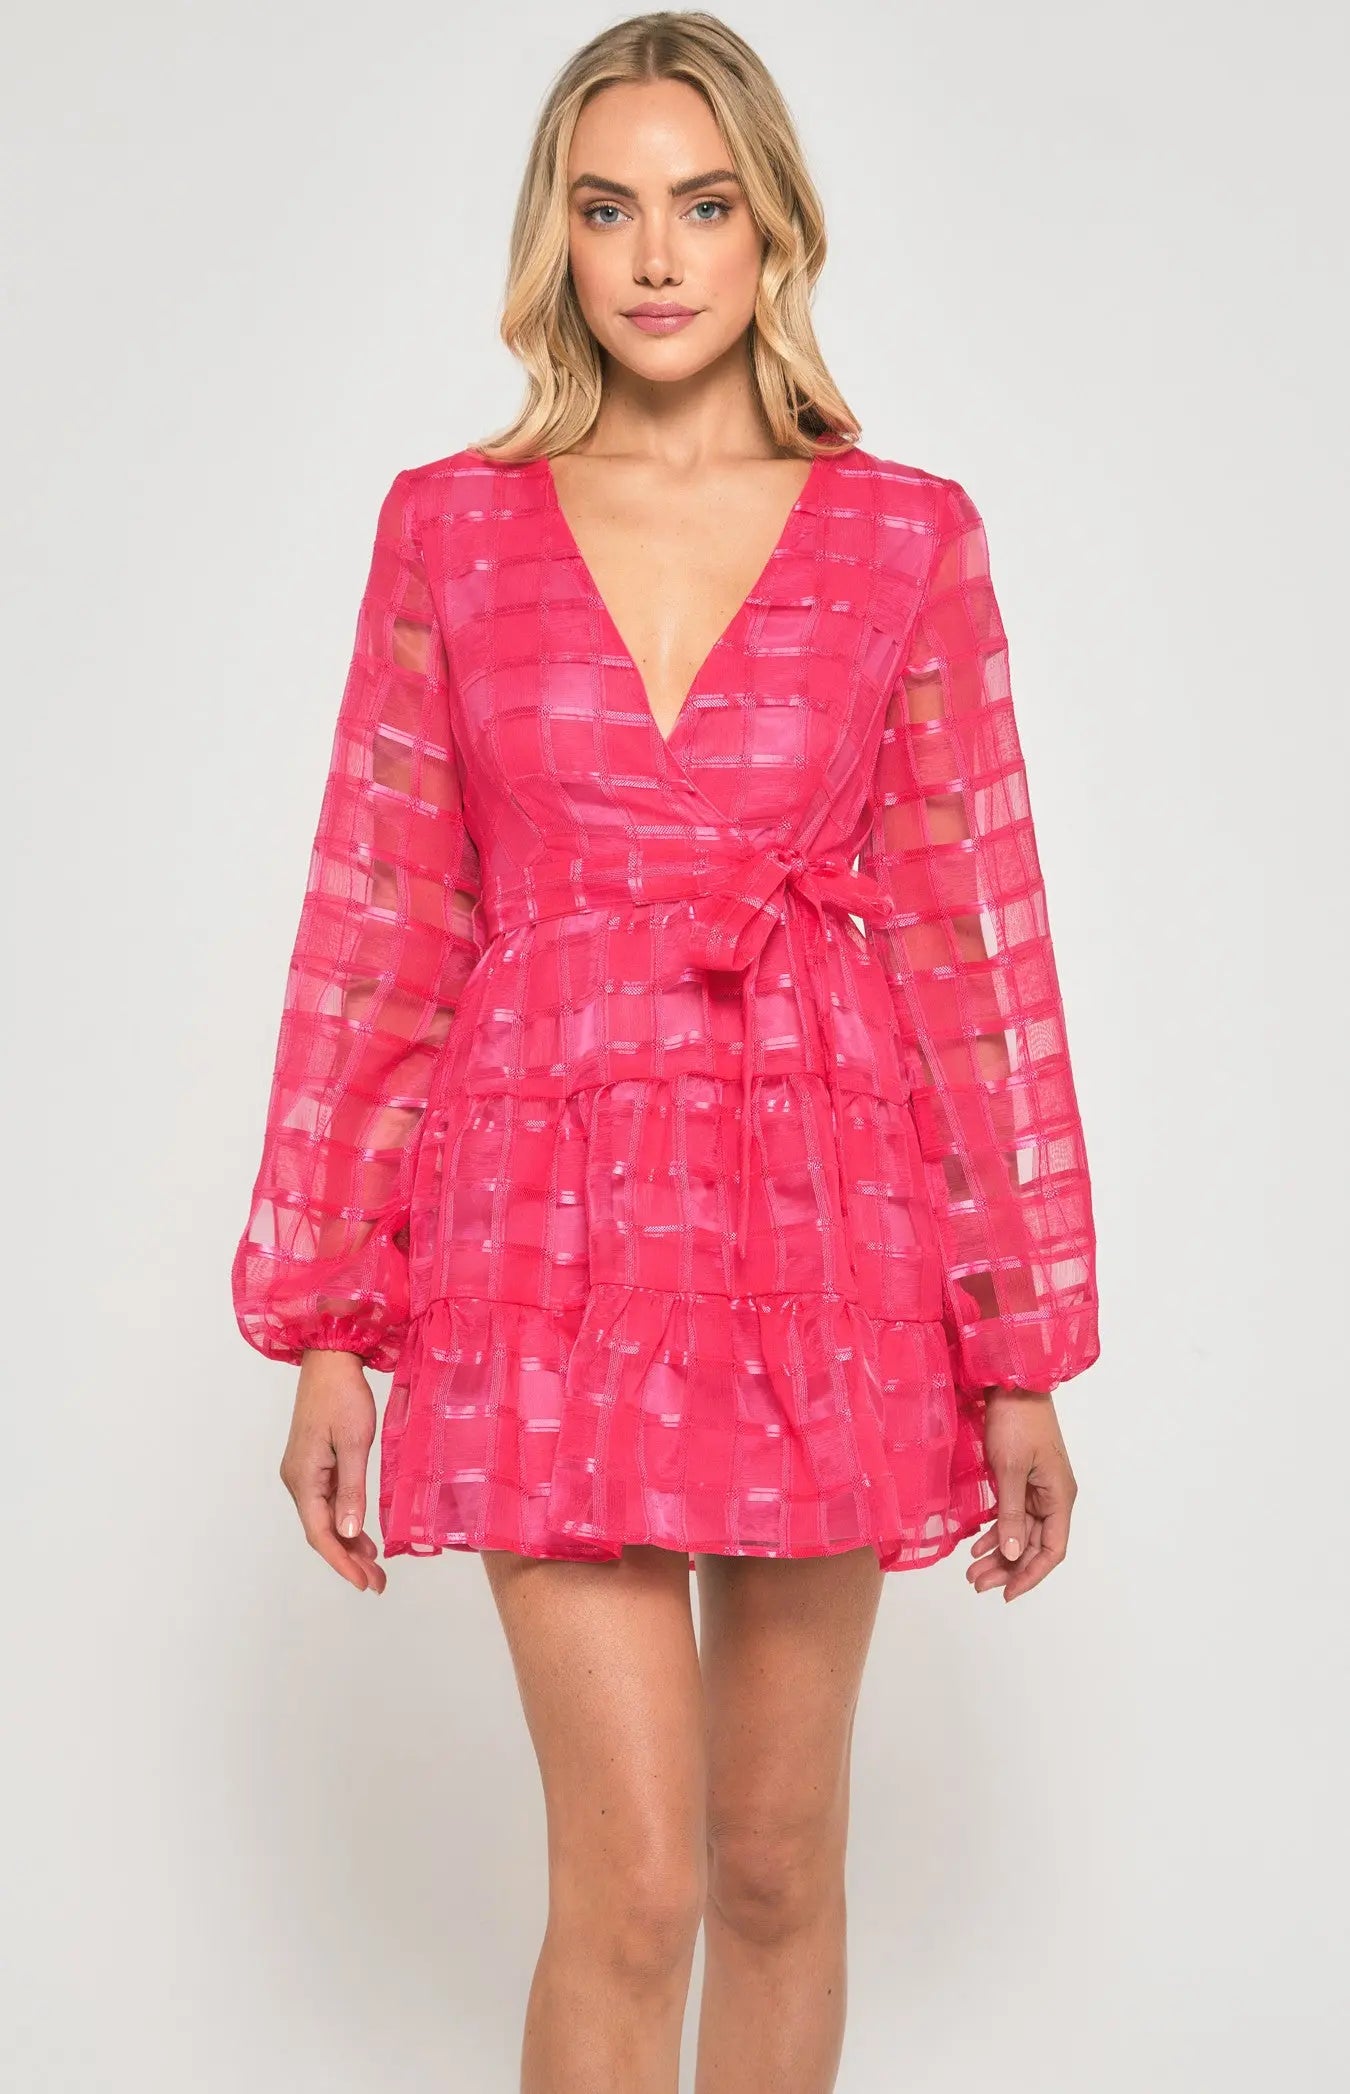 IVANOVA MINI DRESS | Pink checked long sleeve party dress - Saint Australia Fashion 